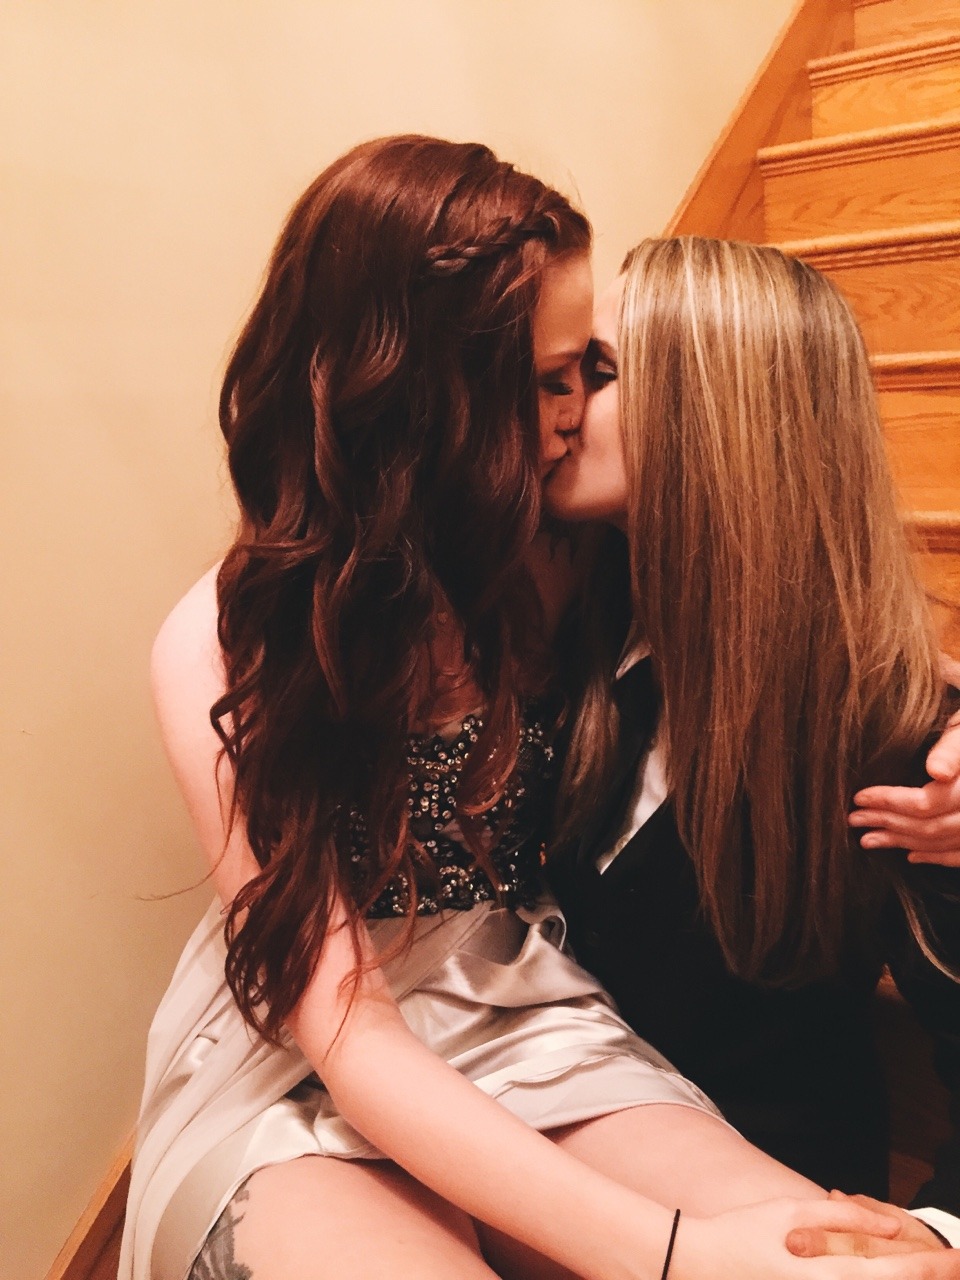 Ftv two lesbian babes kissing